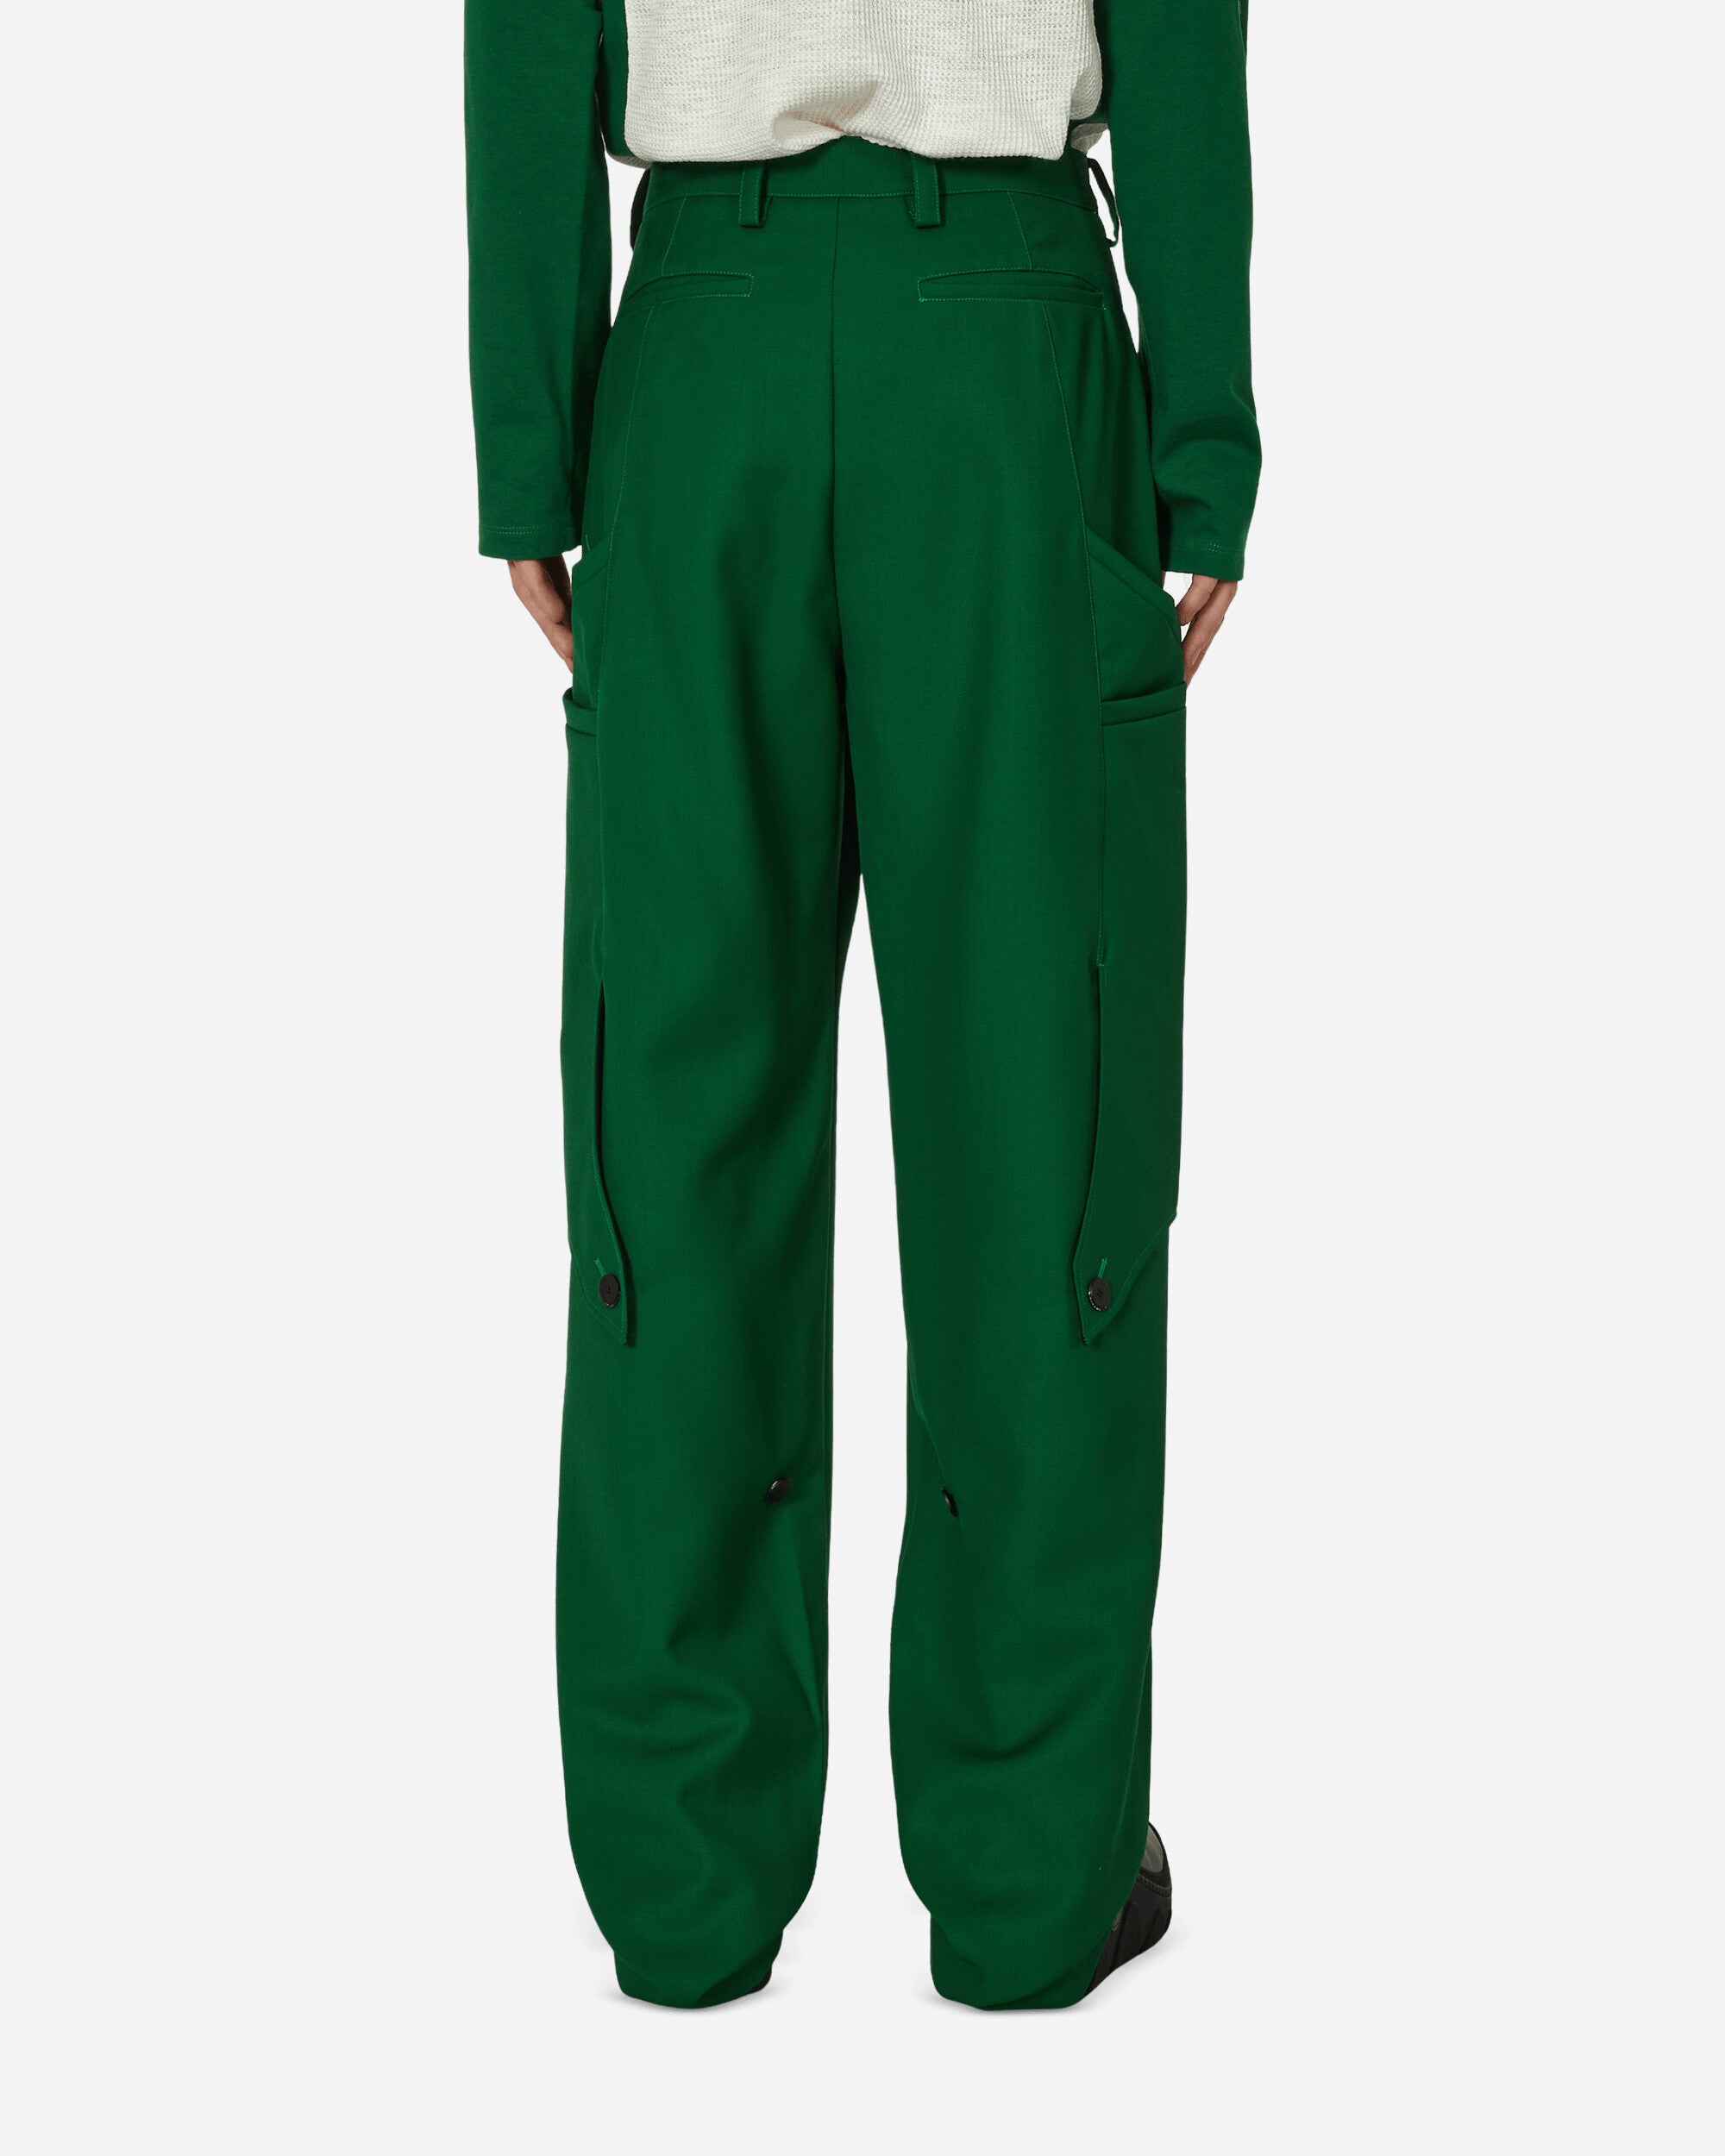 Kiko Kostadinov Megara Trouser Forest Green Pants Trousers KKAW23T01 1